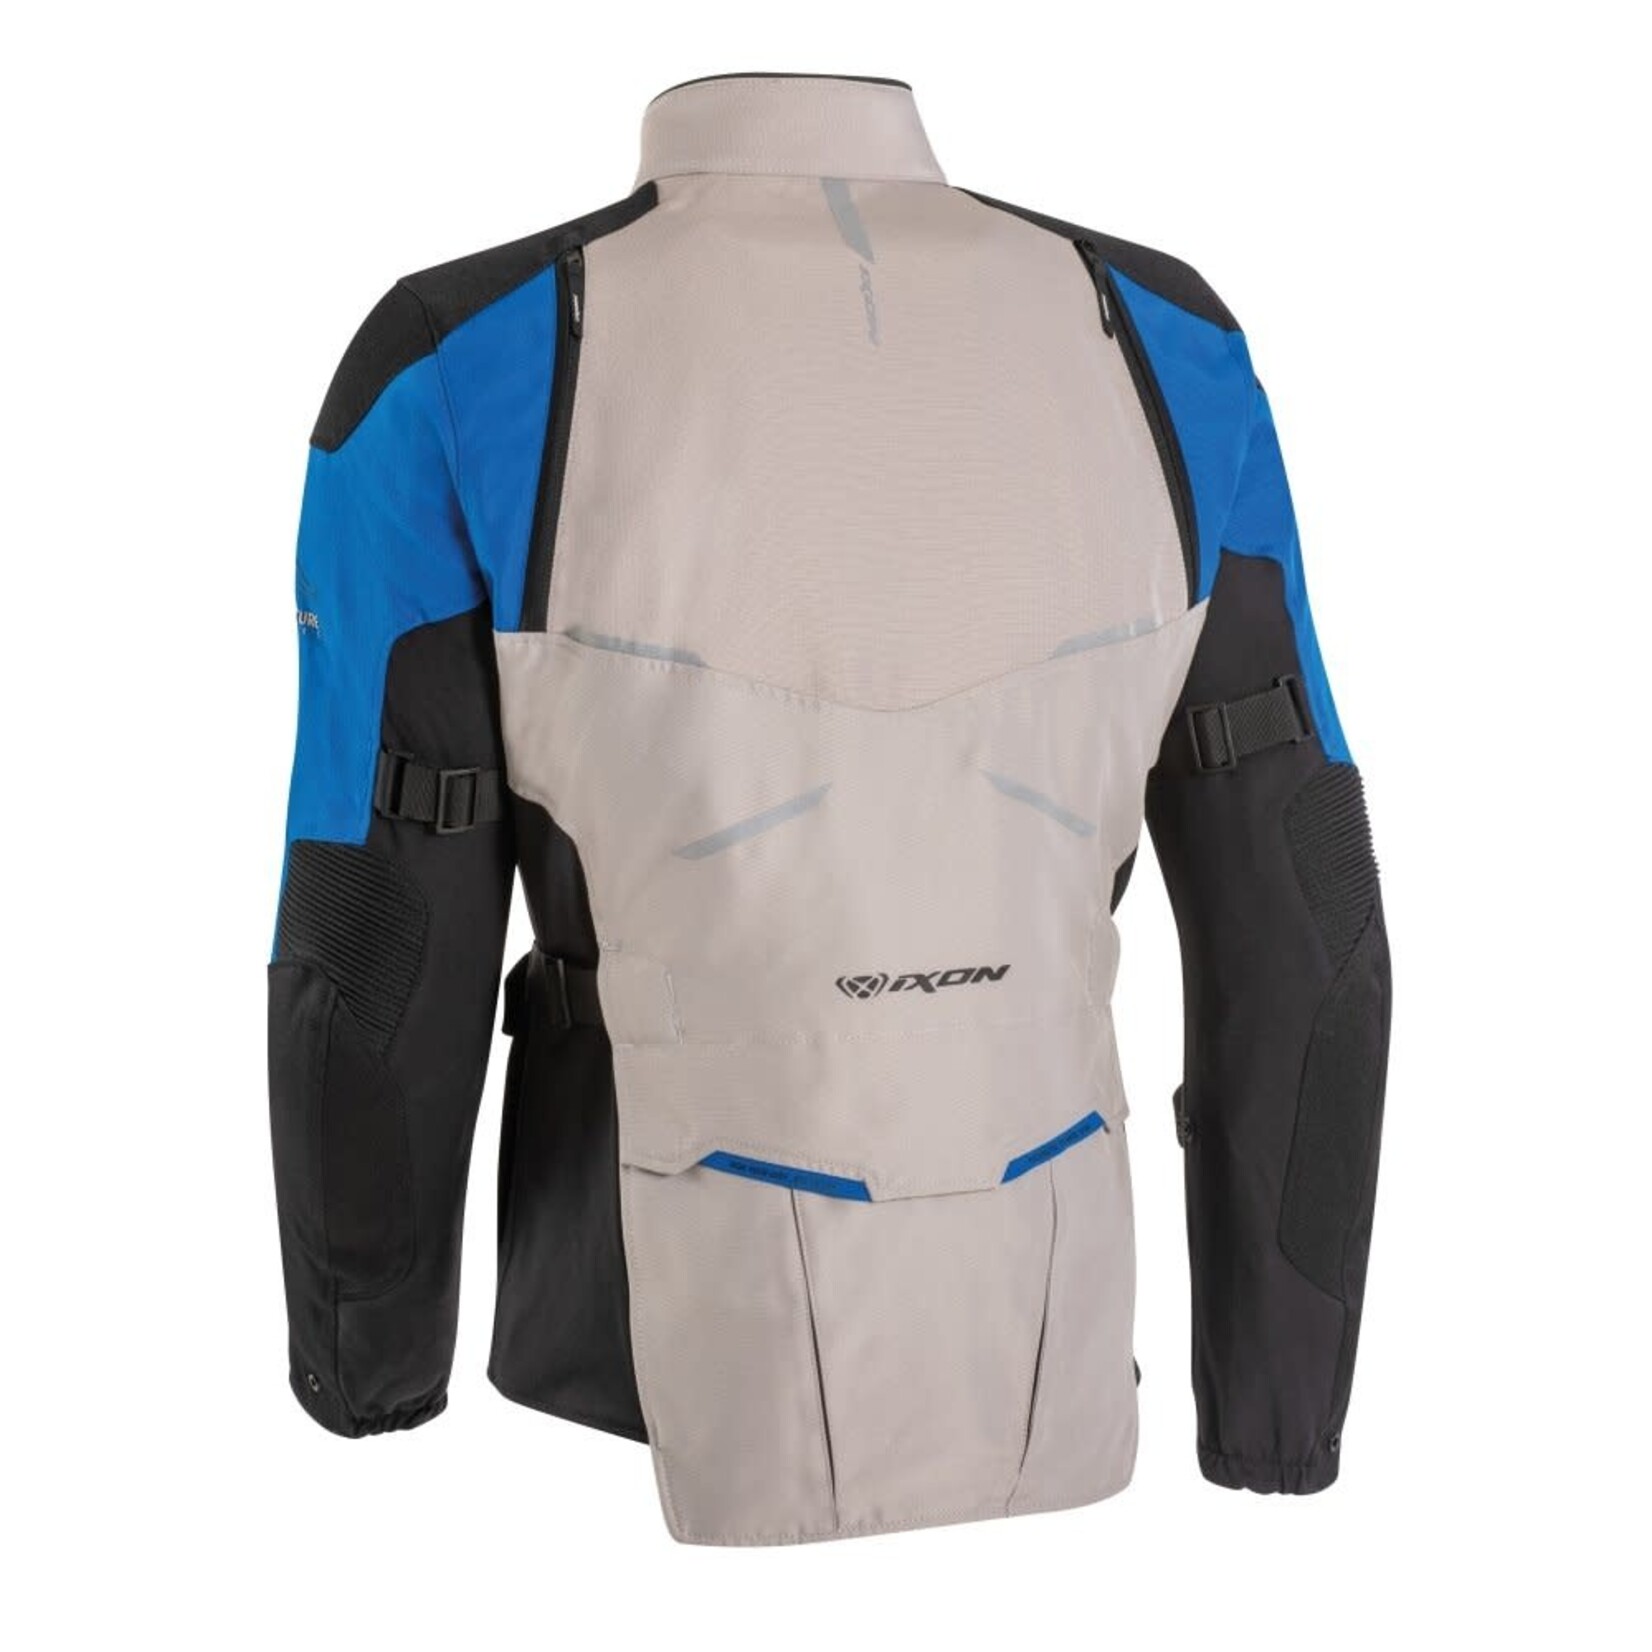 Ixon Ixon jacket textile eddas grege/blue/black